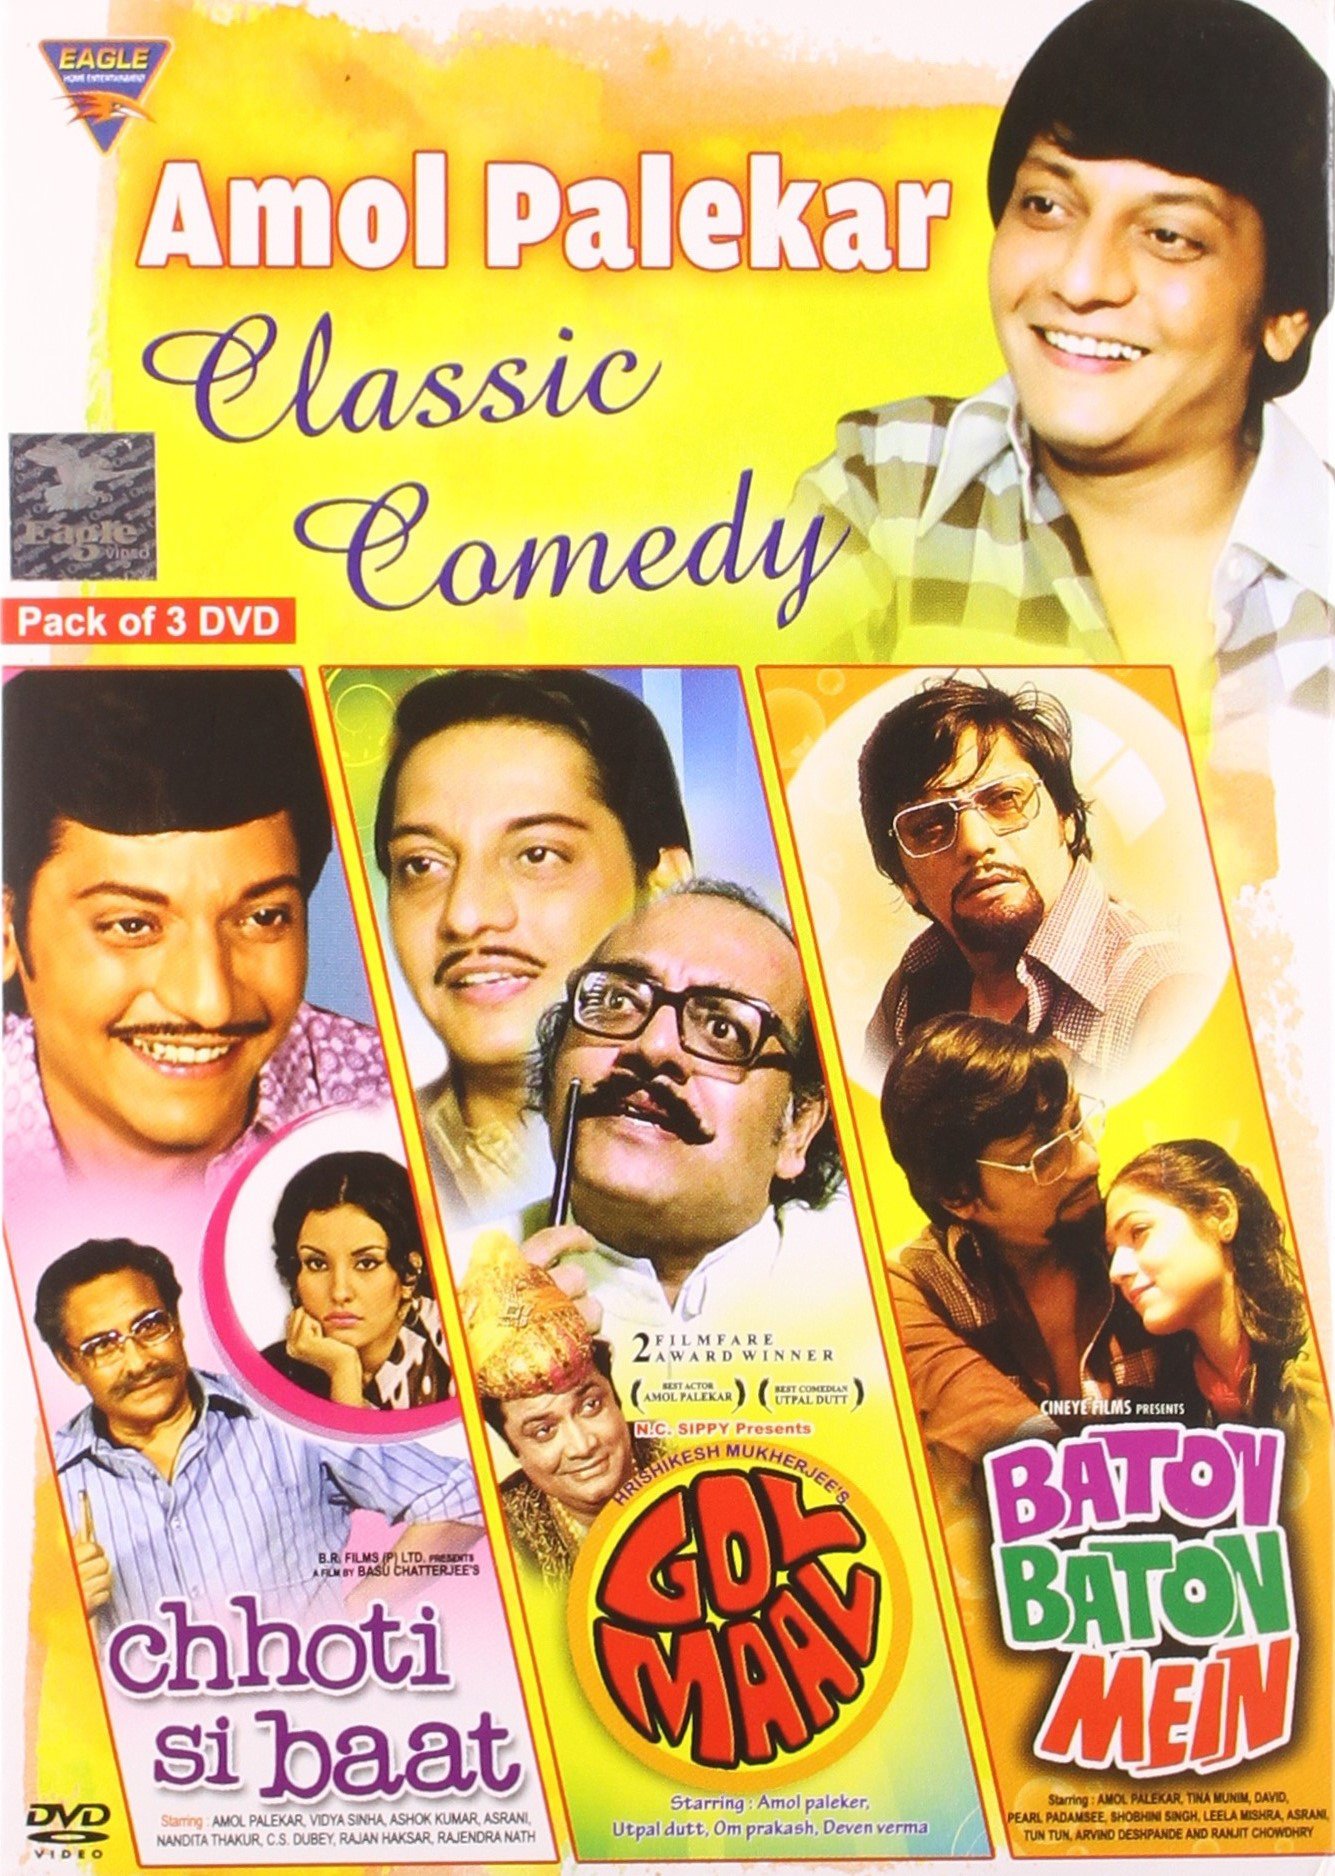 amol-palekar-classic-comedy-chhoti-si-baat-golmaal-baton-baton-mein-m